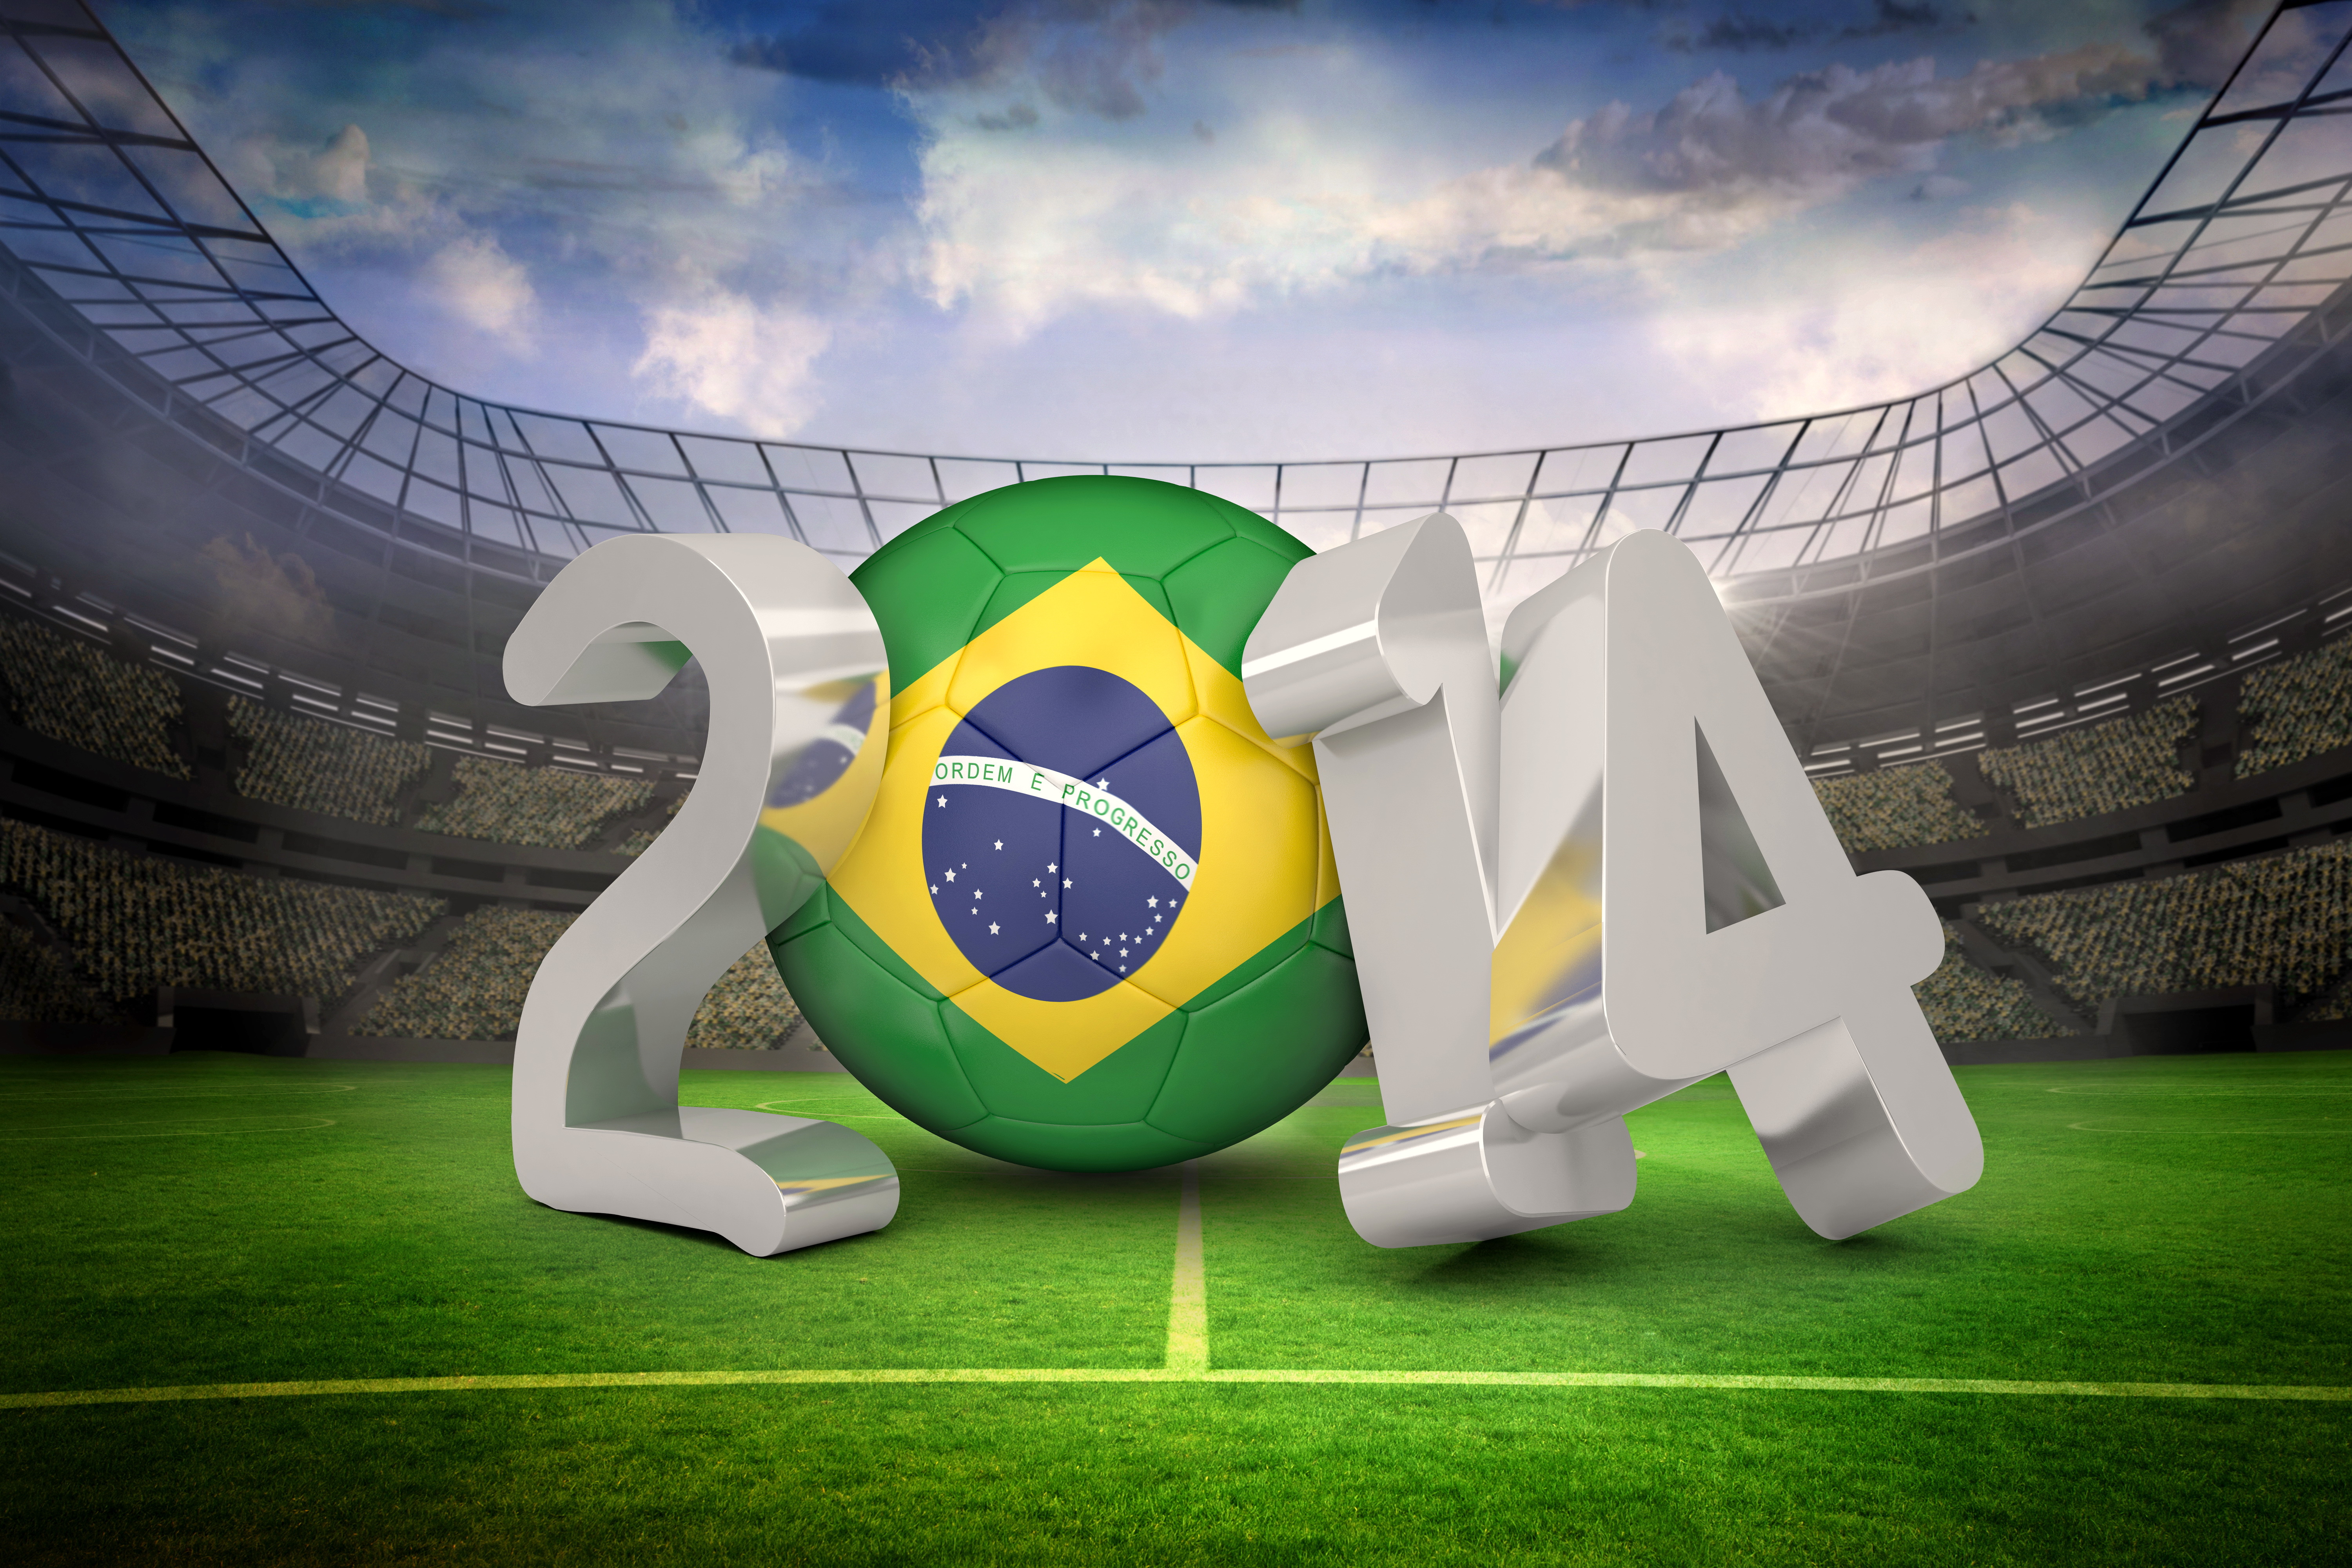 Fifa brazil. ФИФА 2014 Бразилия. Бразилия 2014. ЧМ В Бразилии 2014.